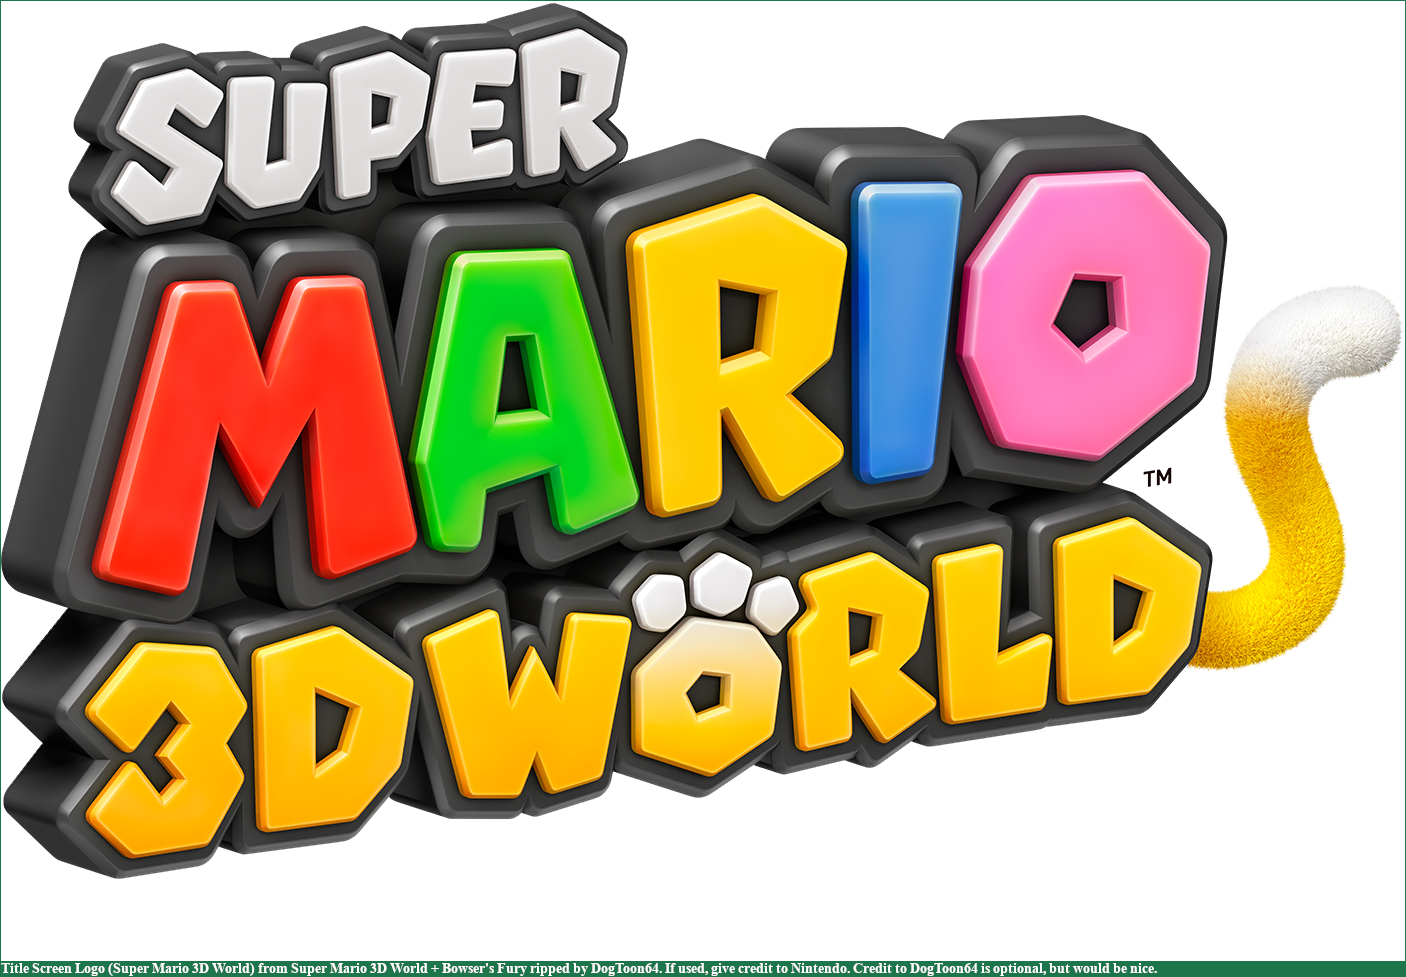 Super Mario 3D World + Bowser's Fury - Title Screen Logo (Super Mario 3D World)